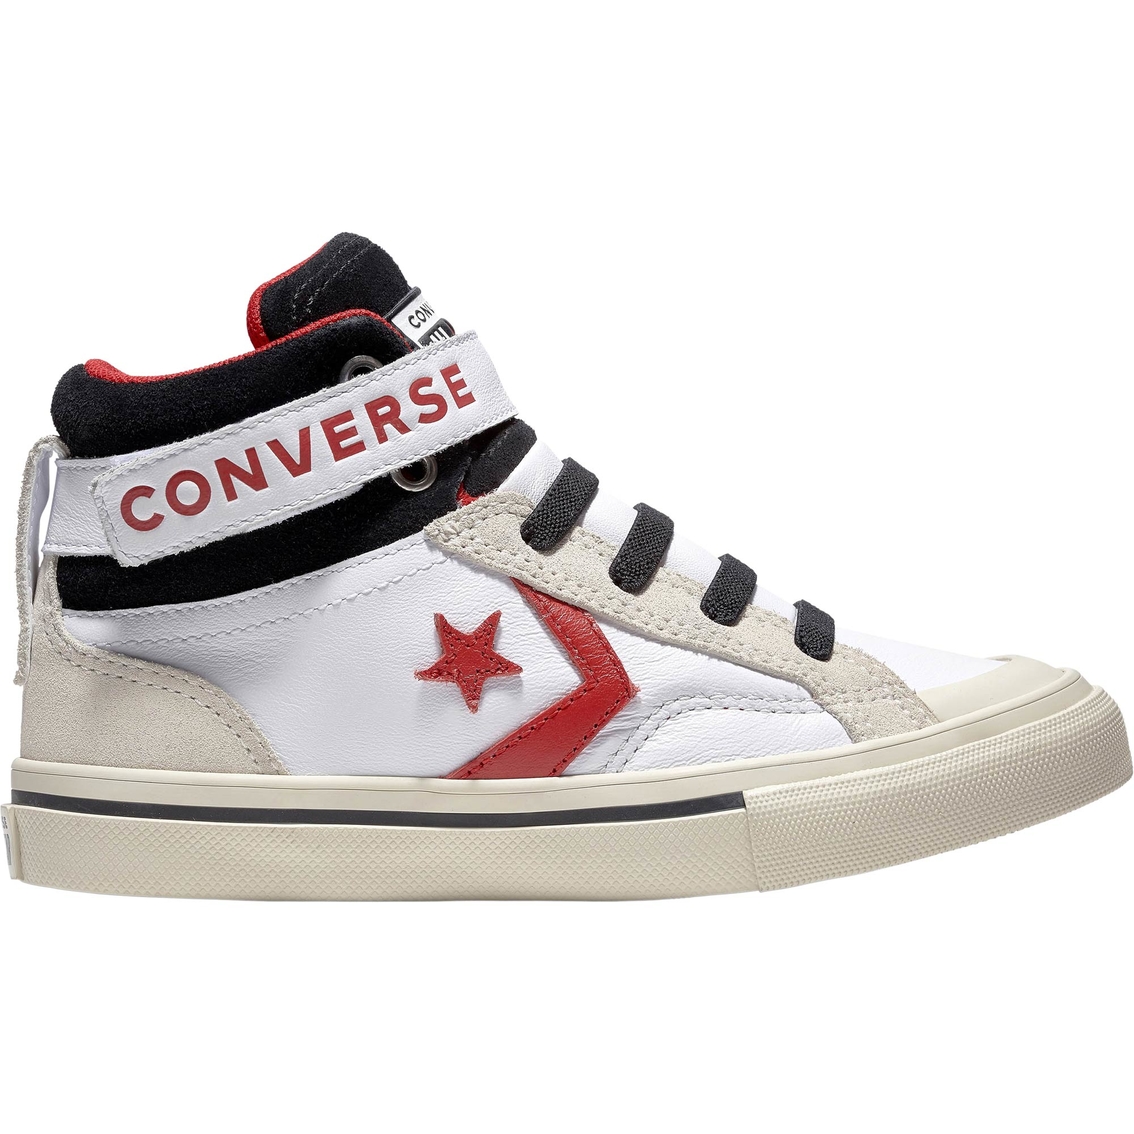 The | | Pro High Top Strap Shop | Shoes Boys Blaze Sneakers Exchange Converse Shoes